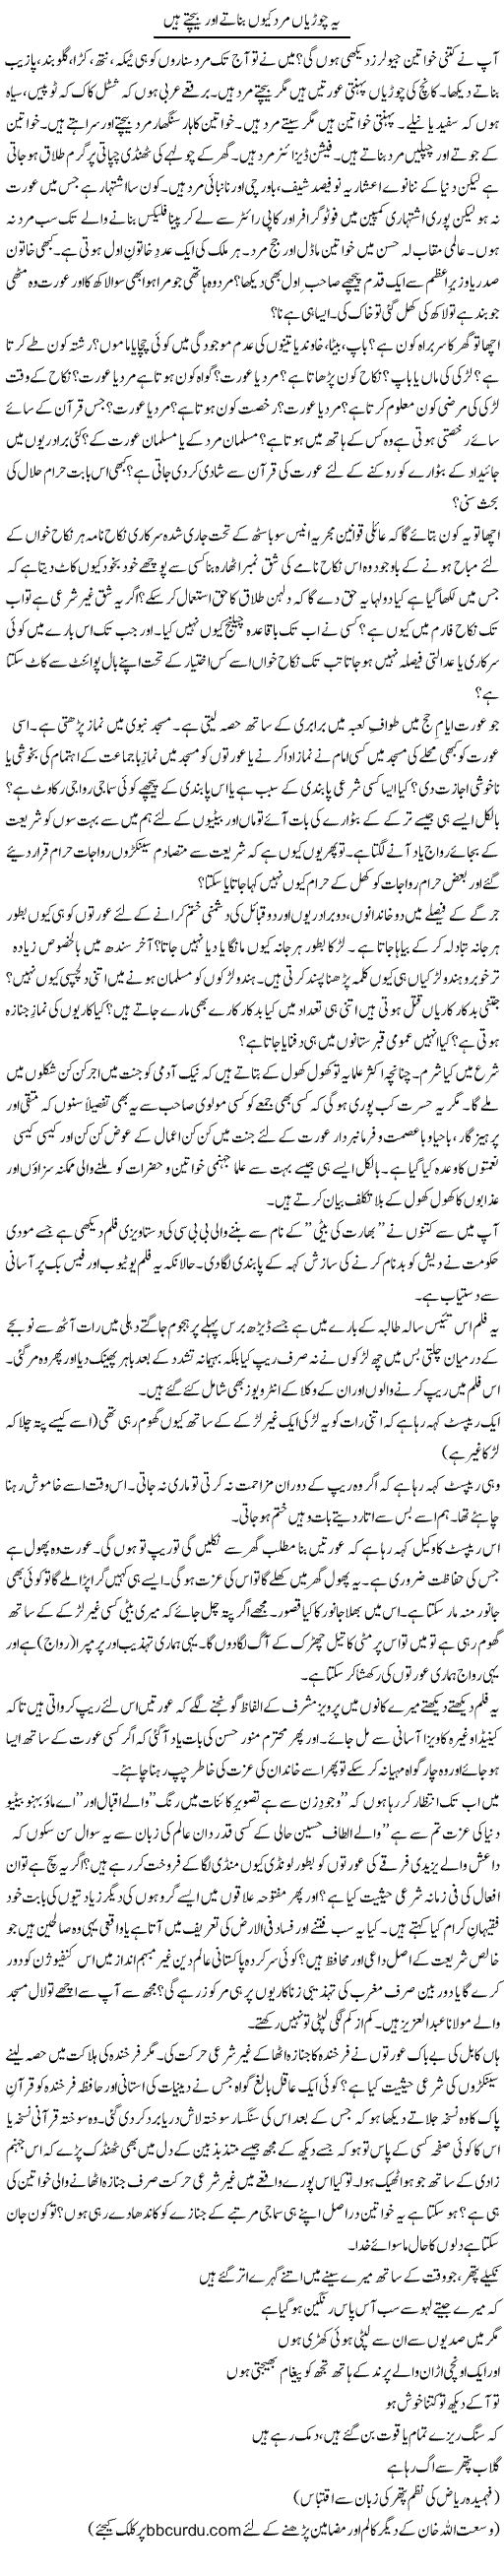 Yeh Choorian Mard Kyun Banatay Aur Baichtay Hain | Wusat Ullah Khan | Daily Urdu Columns